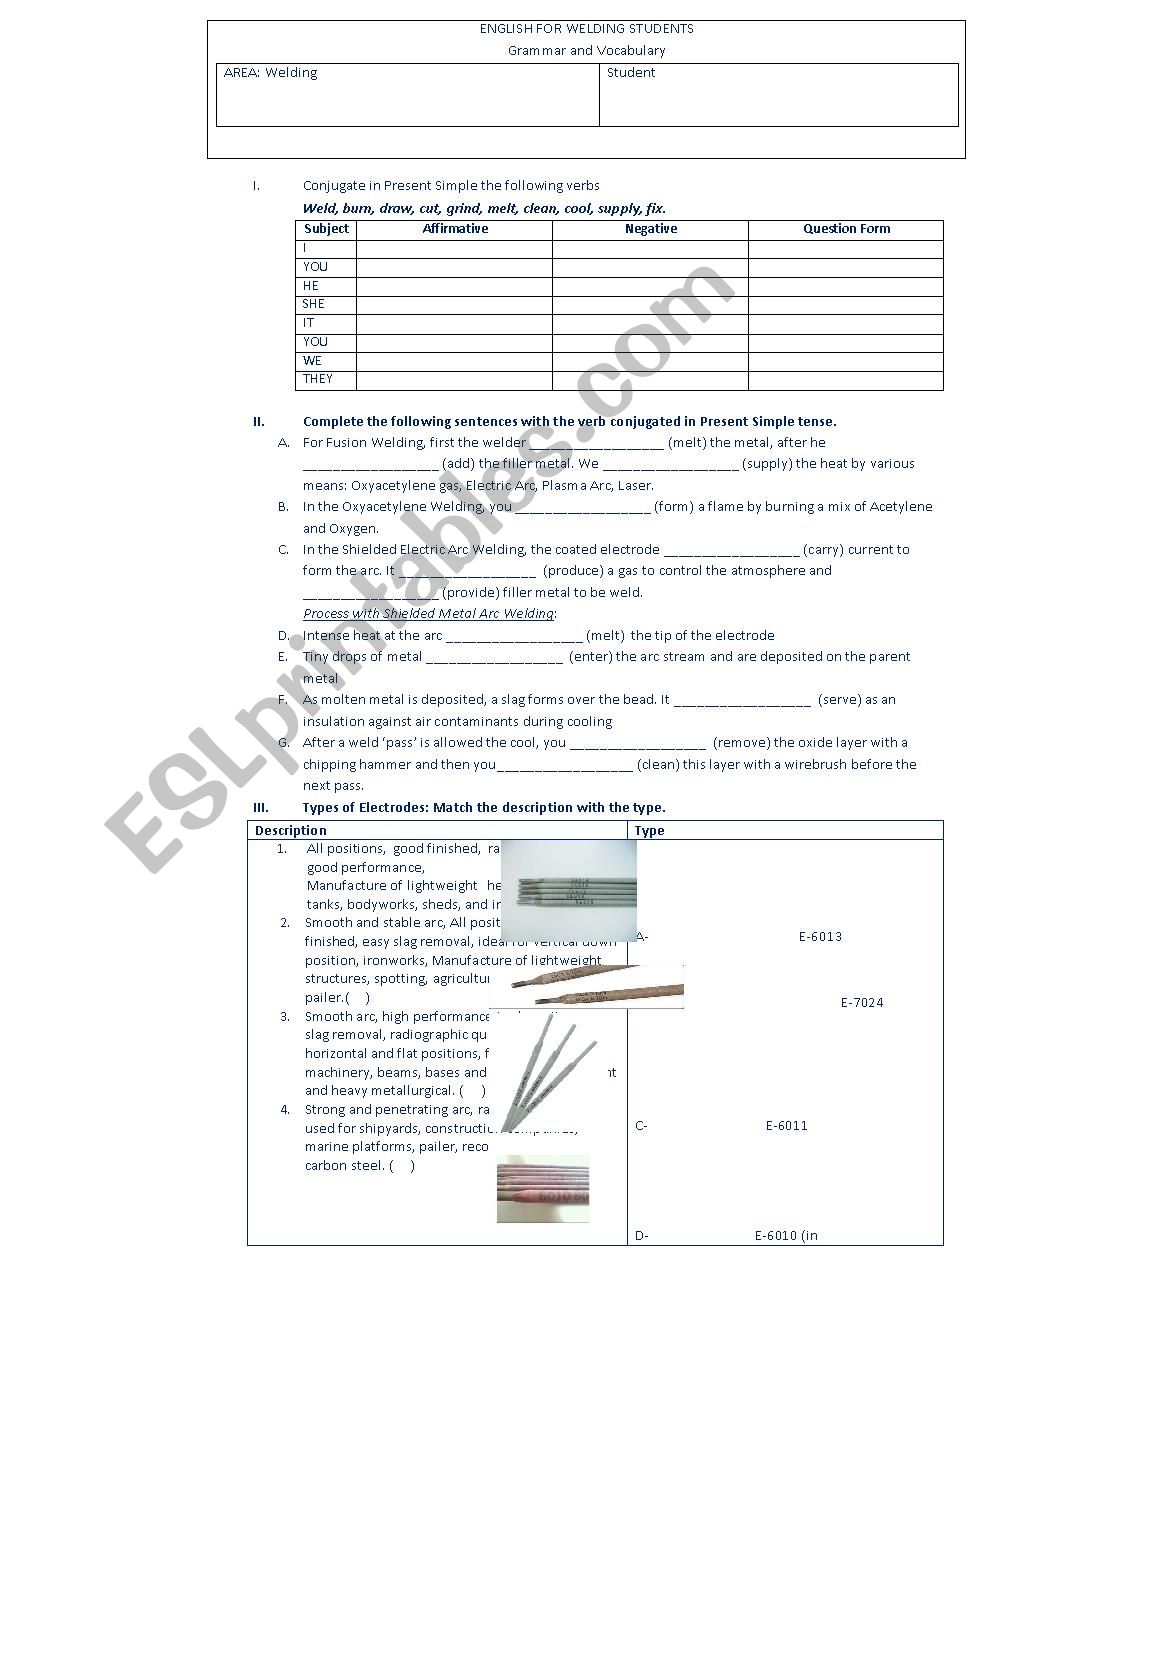 Present Simple and Welding worksheet